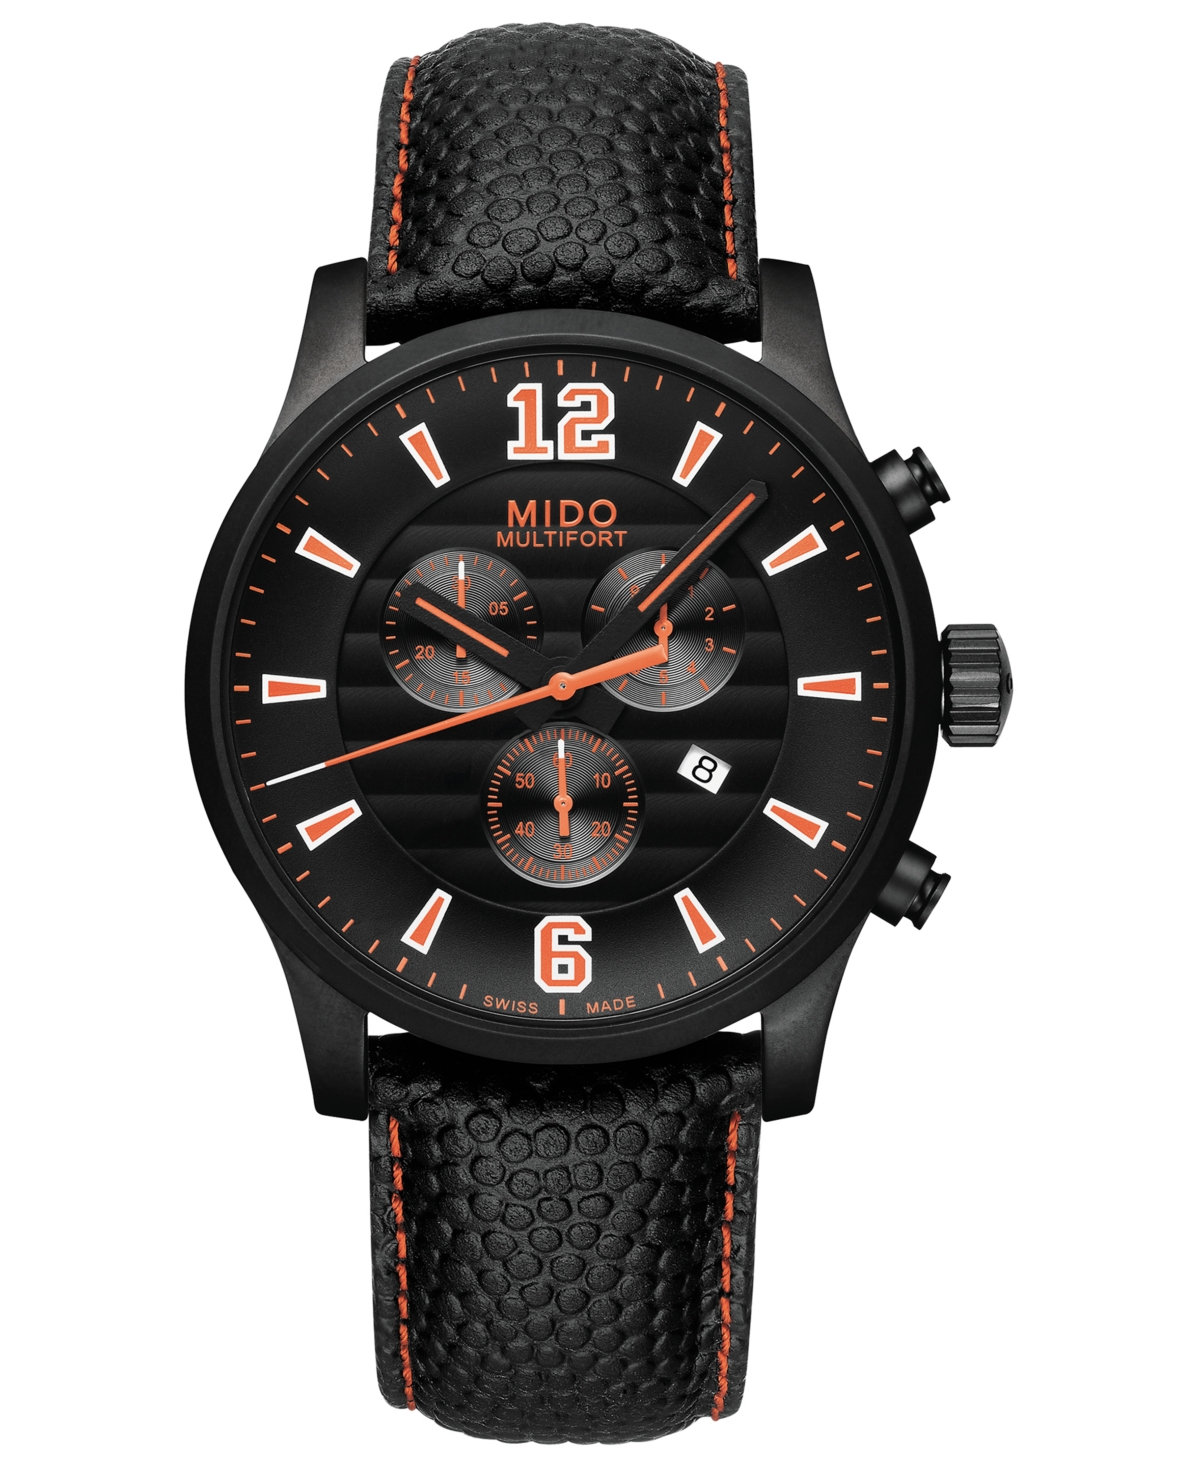 Mido Men's Swiss Chronograph Multifort Black Leather Strap Watch 42mm